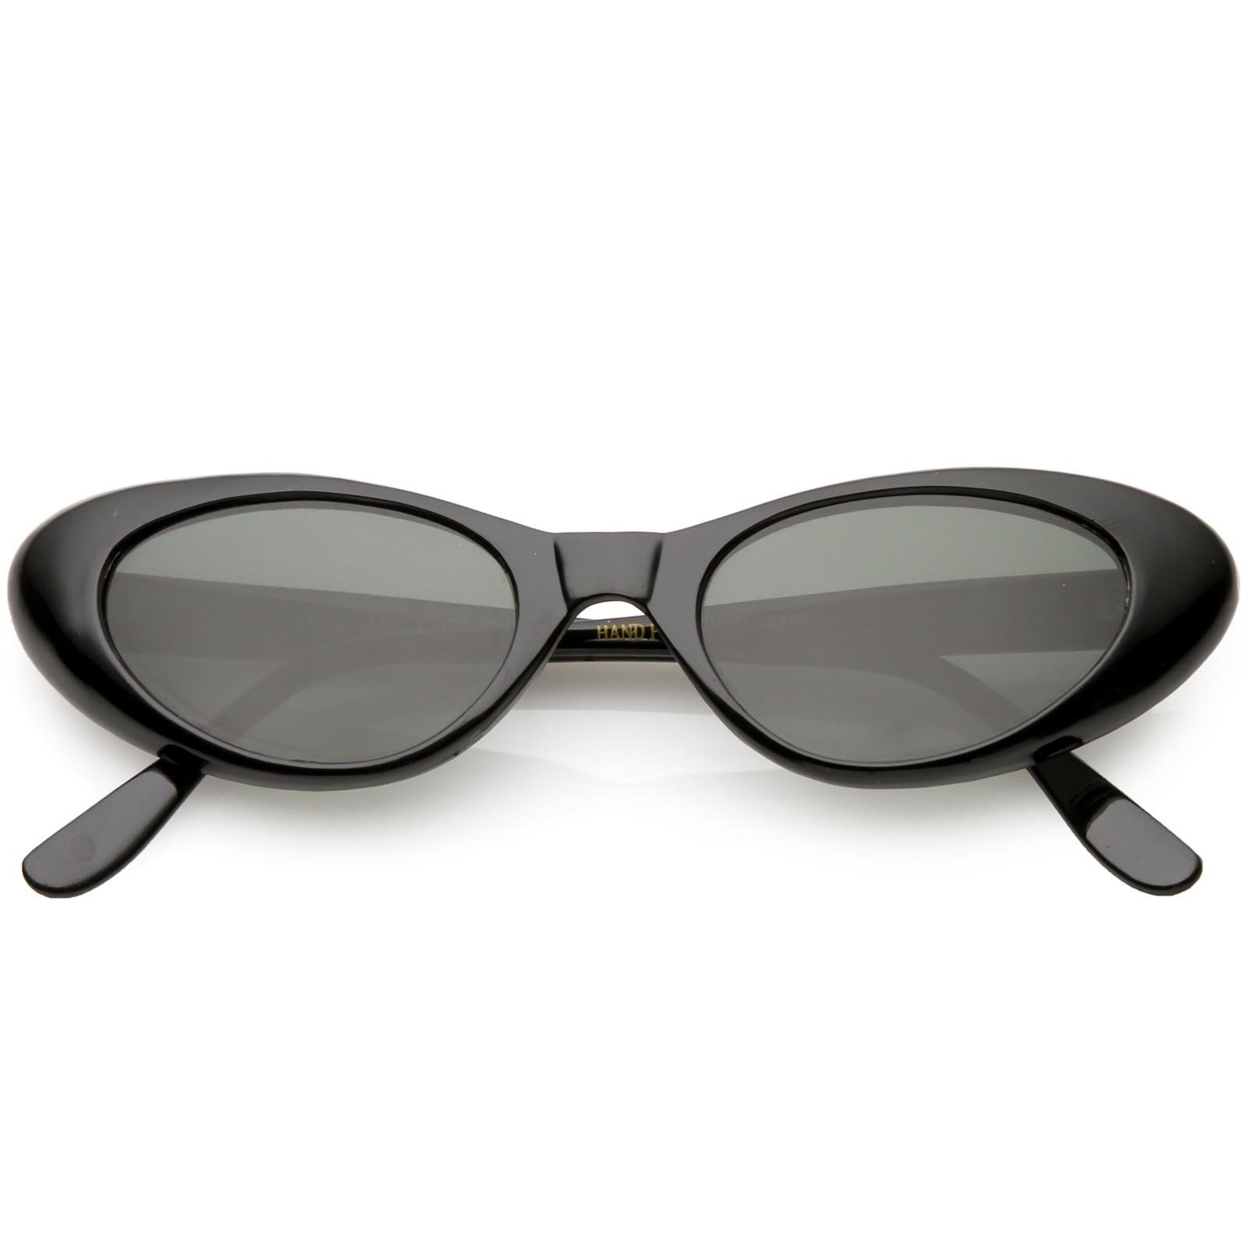 True Vintage Cat Eye Sunglasses Neutral Colored Lens 48mm - Black / Smoke